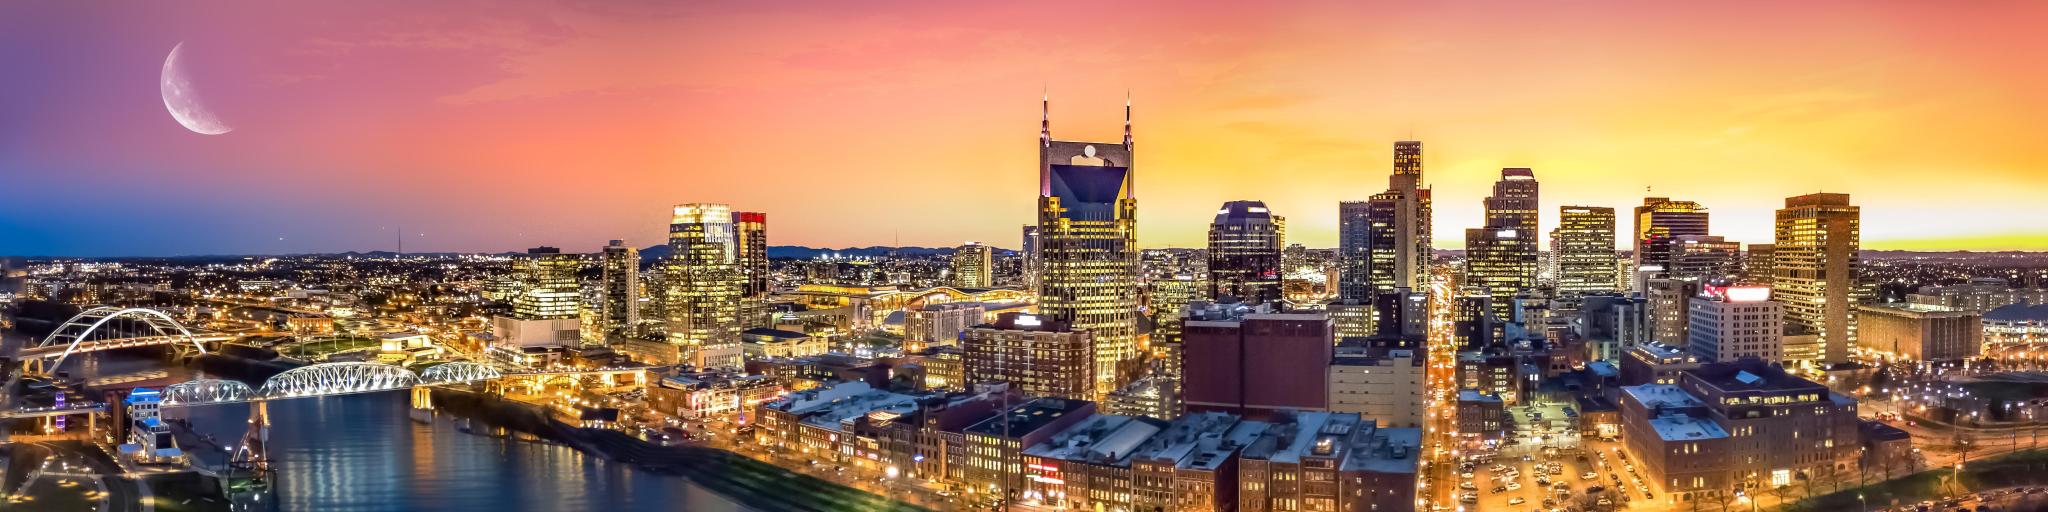 Nashville, Tennessee, USA skyline with moon at sunset.